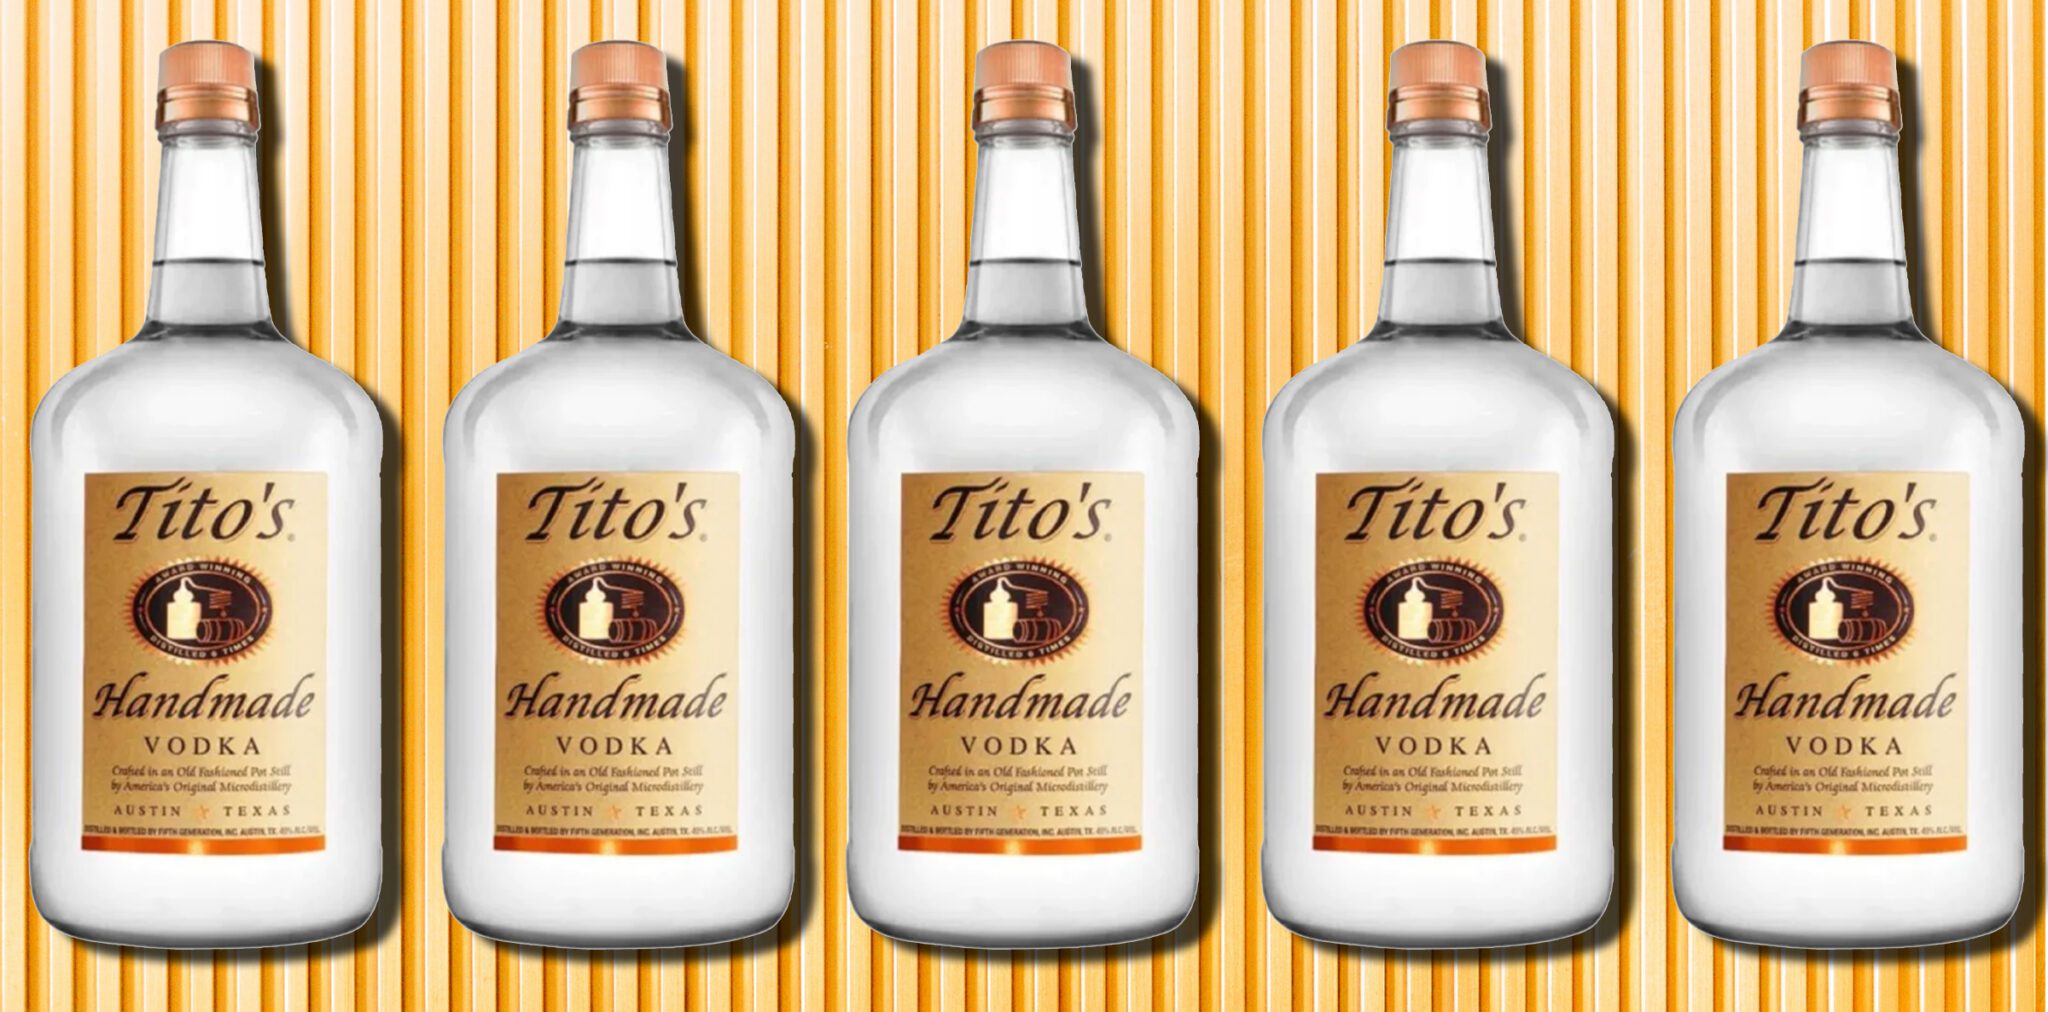 handle of tito's handmade vodka